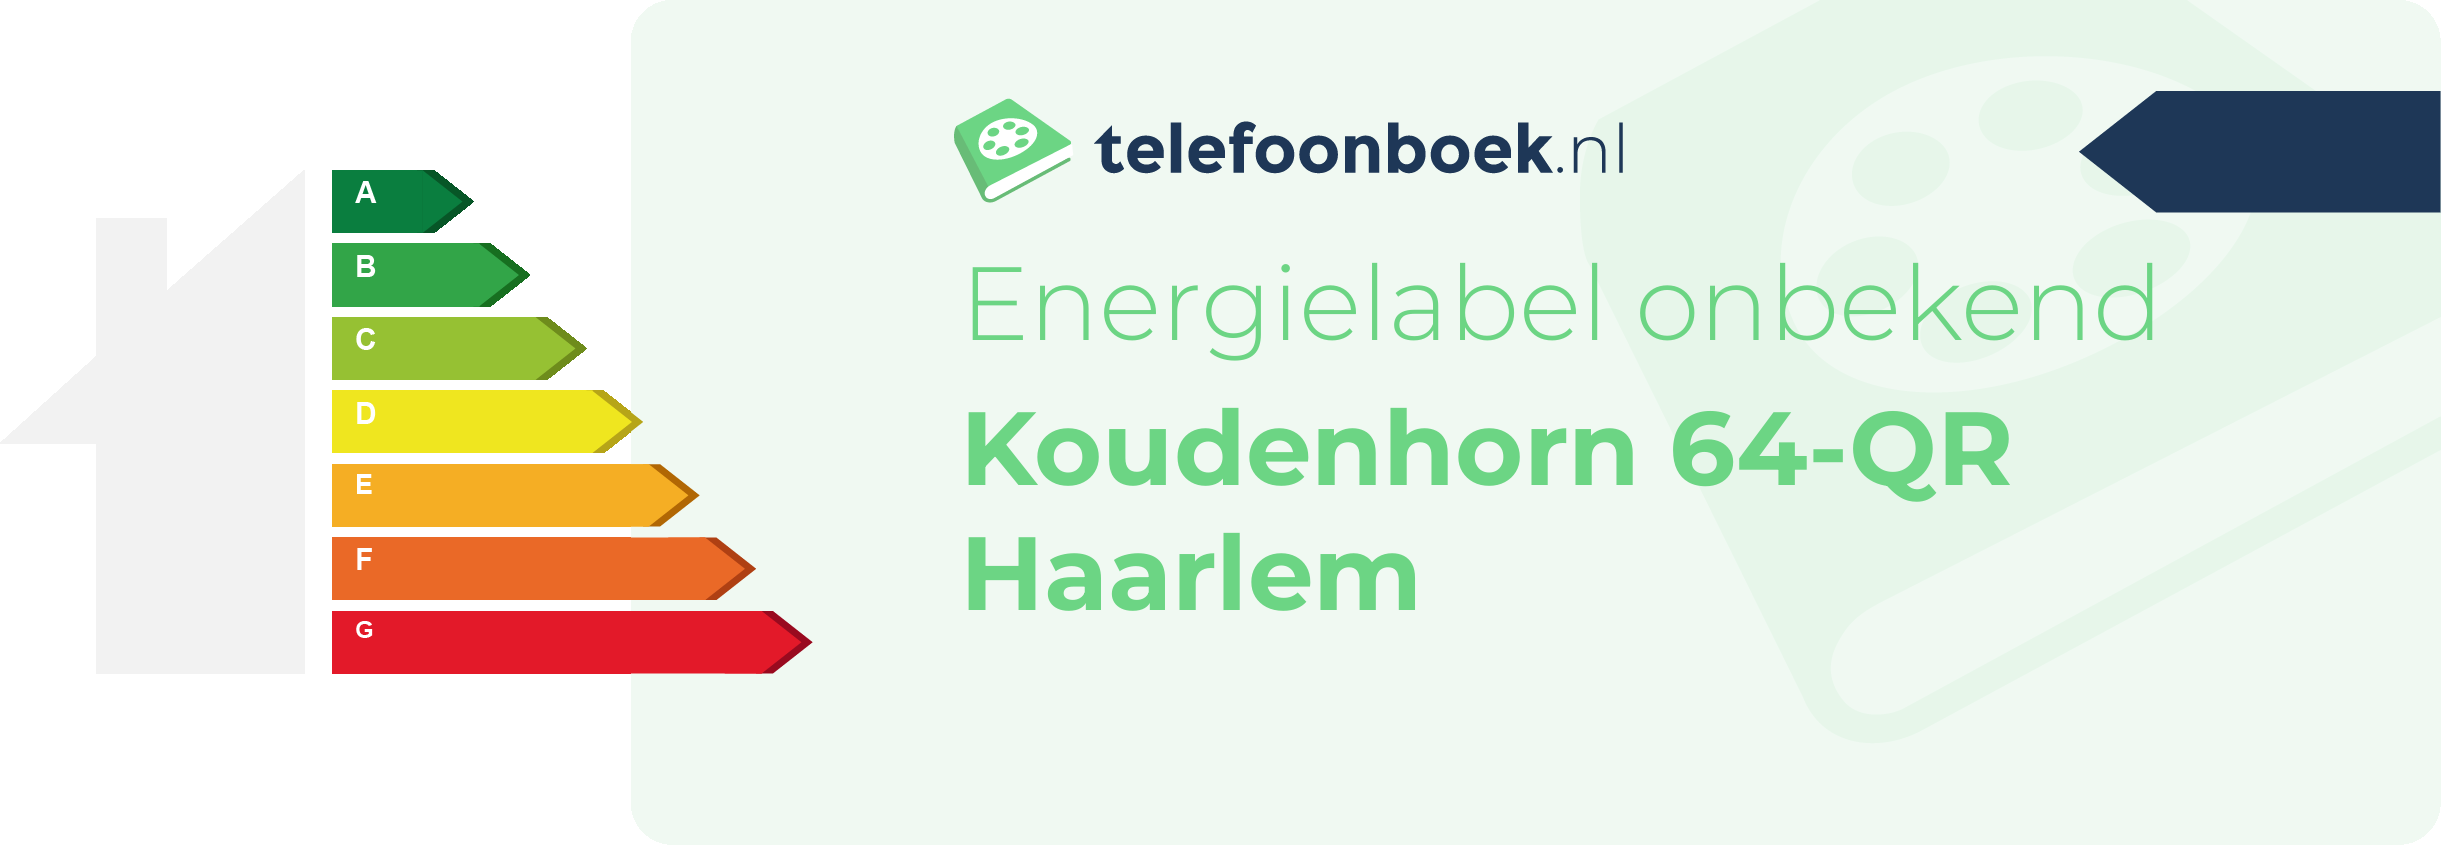 Energielabel Koudenhorn 64-QR Haarlem